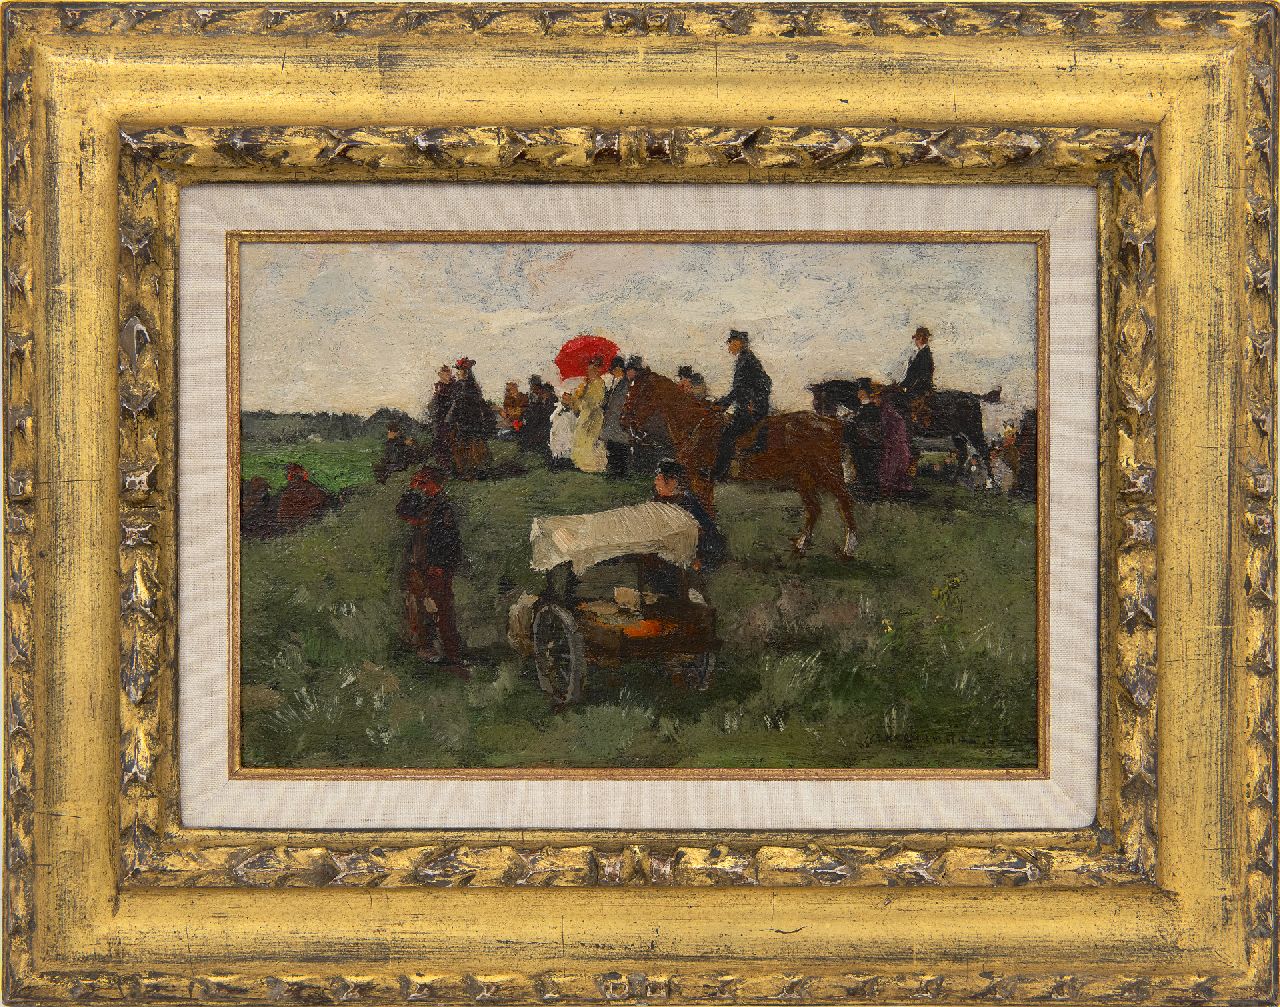 Akkeringa J.E.H.  | 'Johannes Evert' Hendrik Akkeringa | Paintings offered for sale | At the horseraces on Clingendael, oil on panel 16.5 x 25.0 cm, signed l.r. and painted ca. 1898